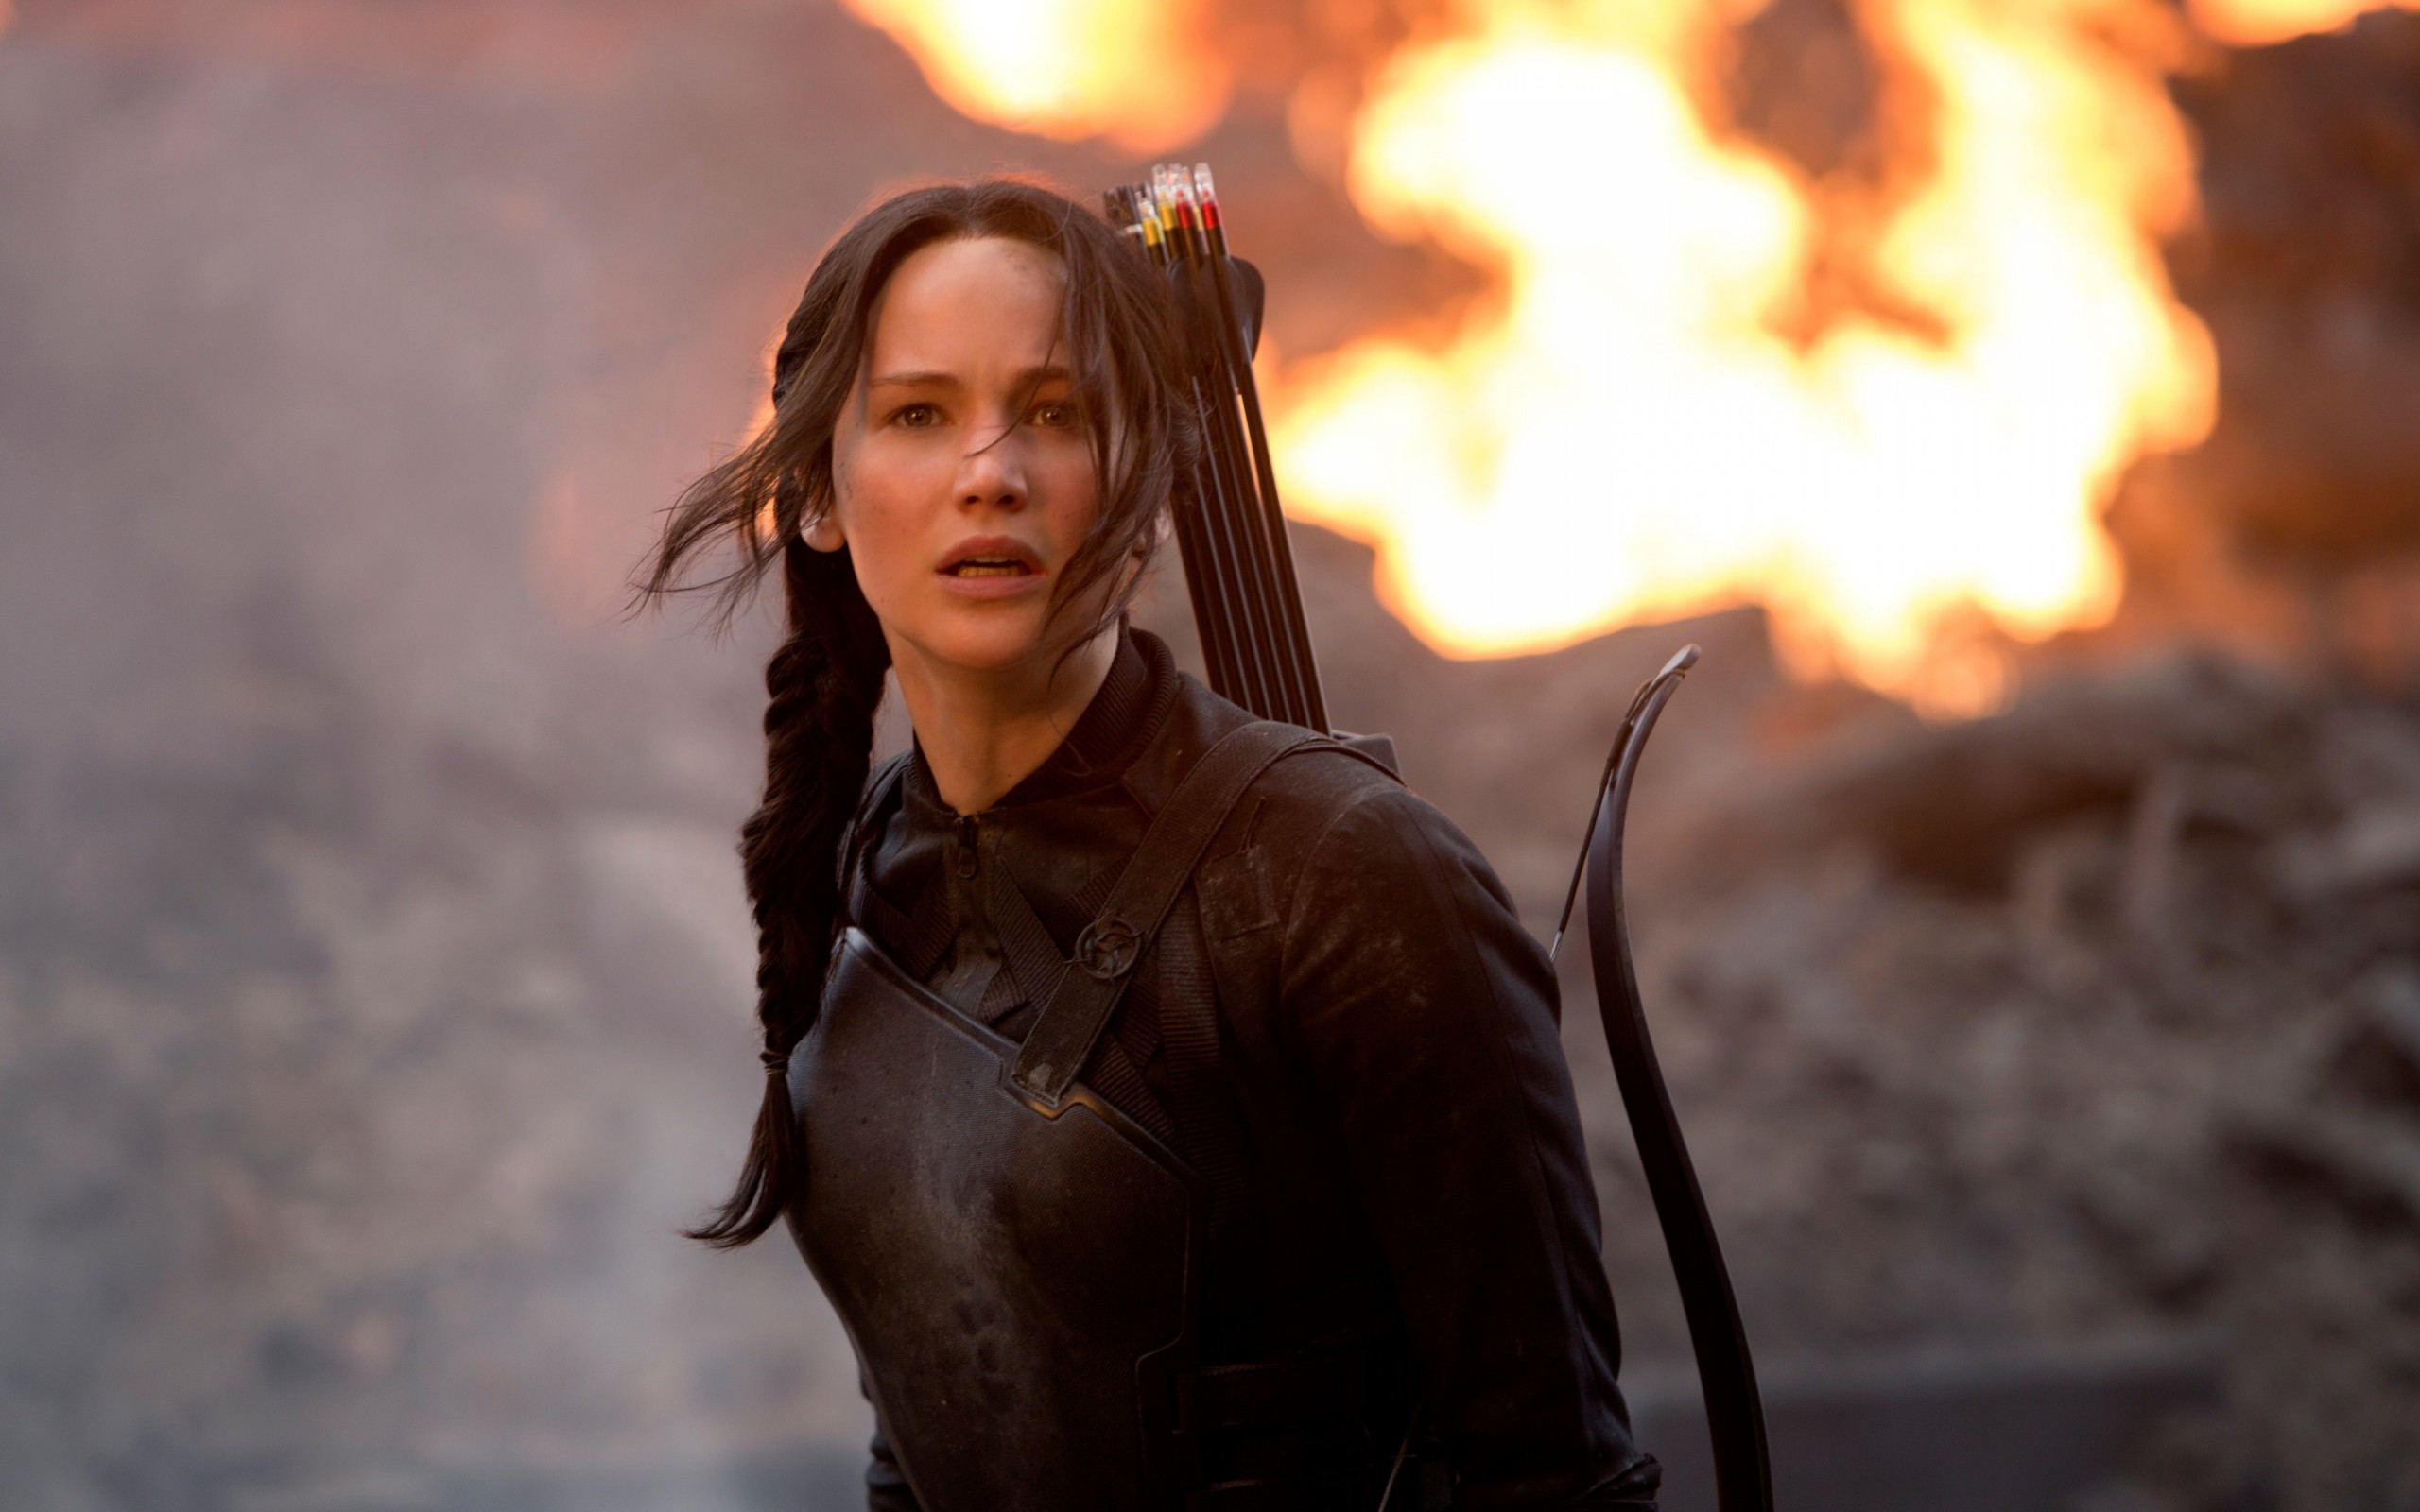 Jennifer Lawrence in The Hunger Games Wallpaper for Desktop 2560x1600